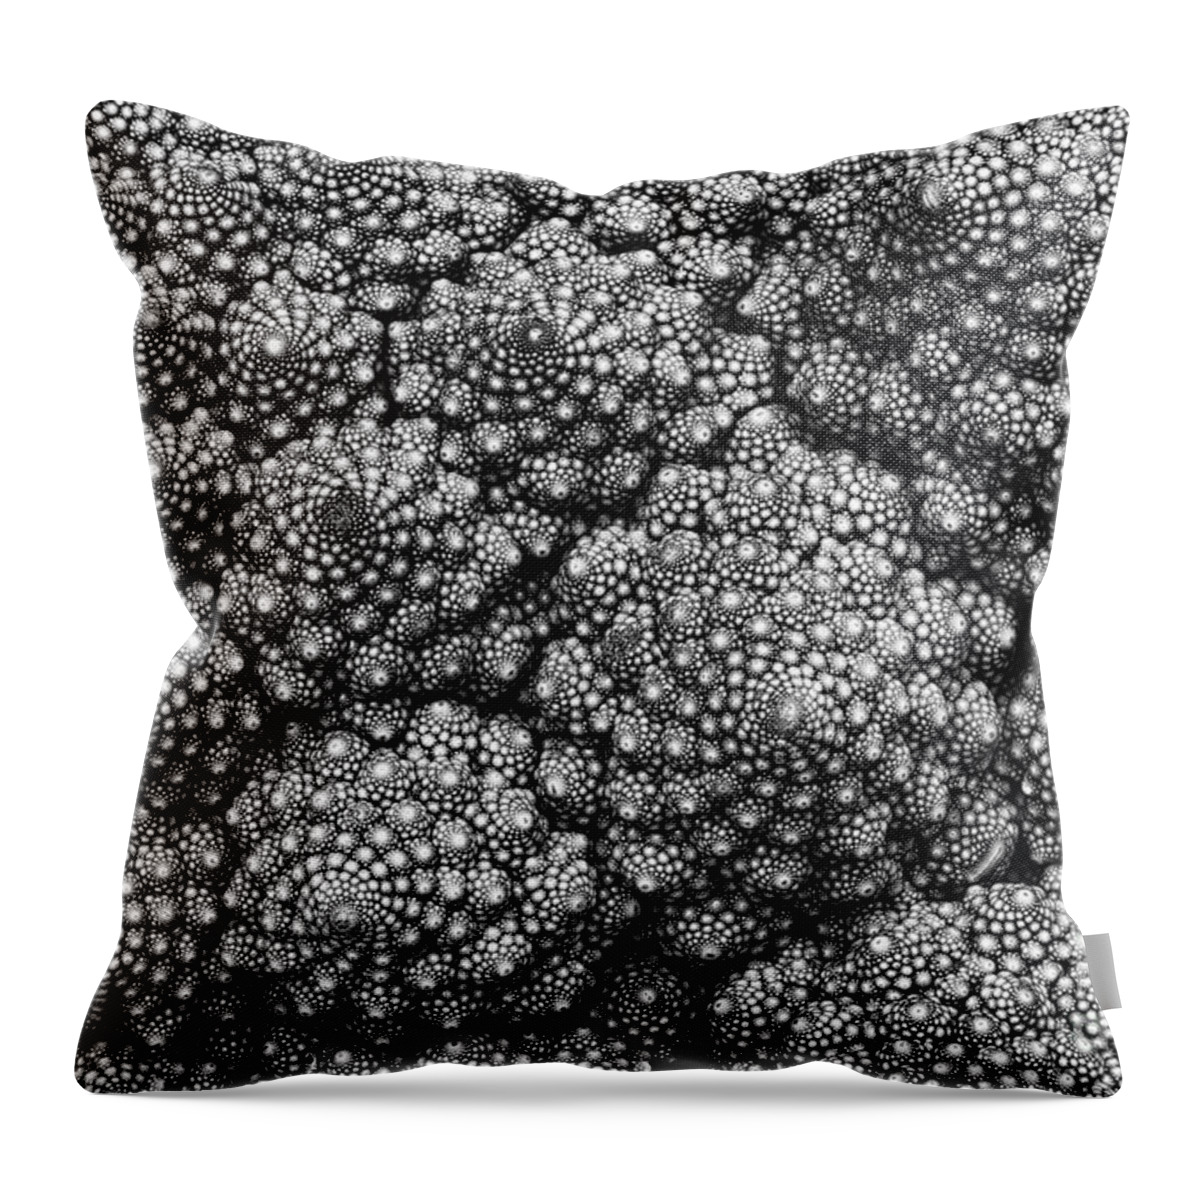 Romanesque Throw Pillow featuring the photograph Romanesco Cauliflower Pattern Monochrome by Tim Gainey